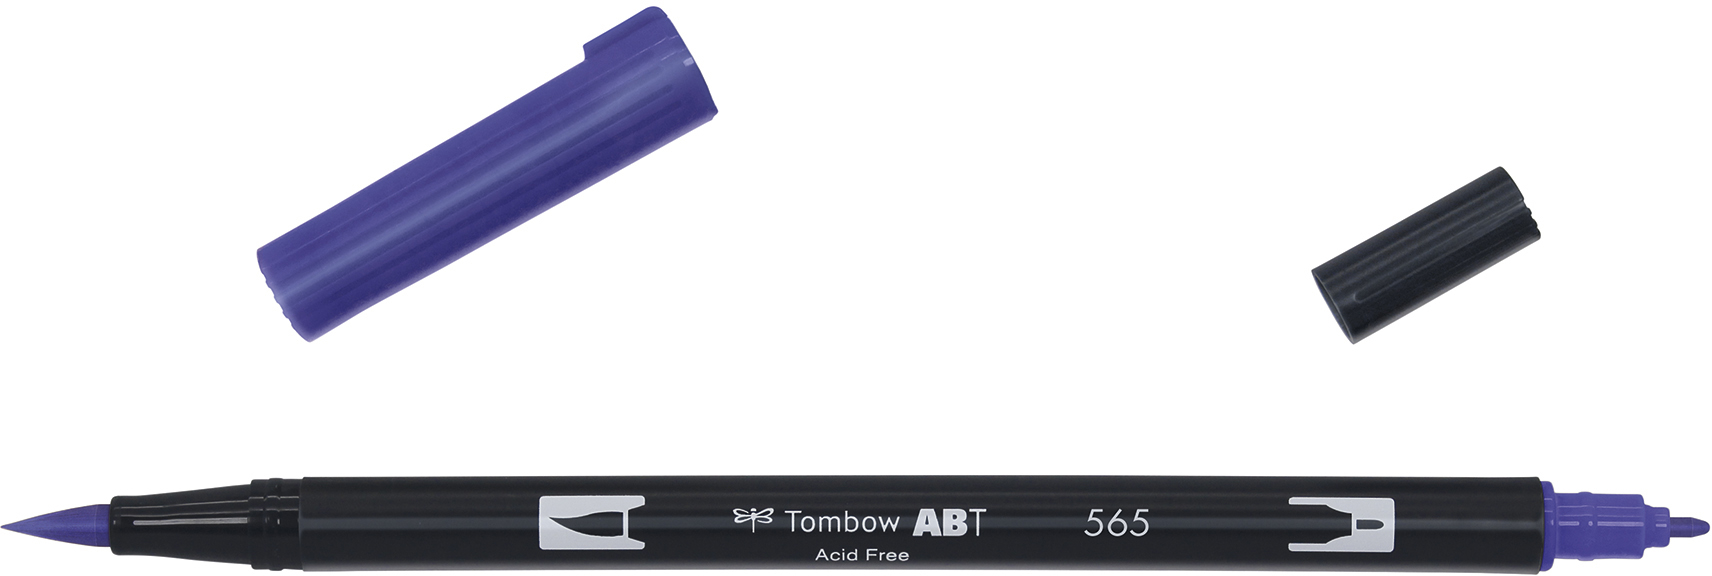 TOMBOW Dual Brush Pen ABT 565 bleu profond